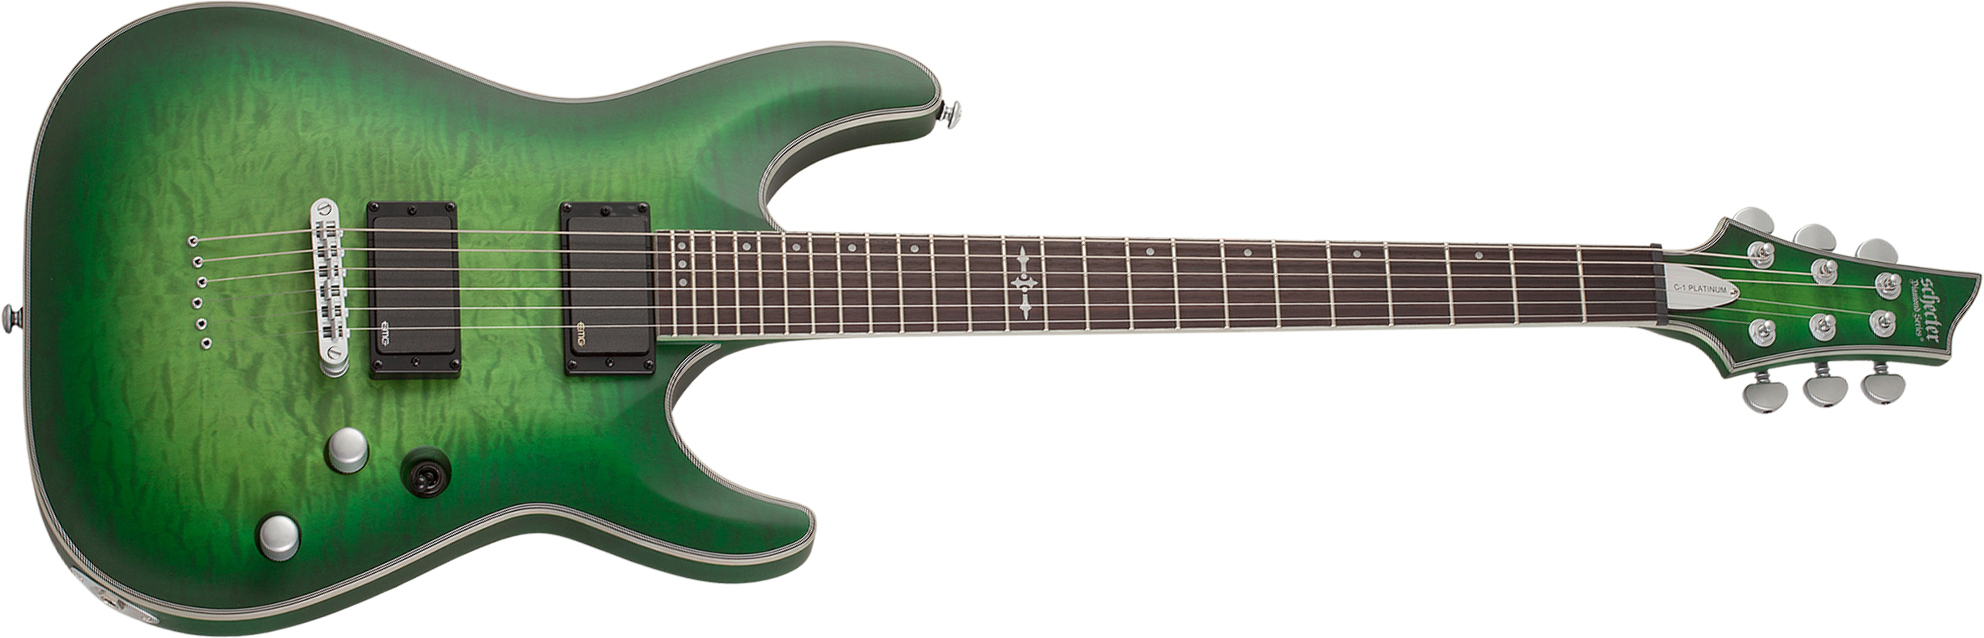 Schecter C-1 Platinum 2h Emg Ht Eb - Satin Green Burst - Str shape electric guitar - Main picture